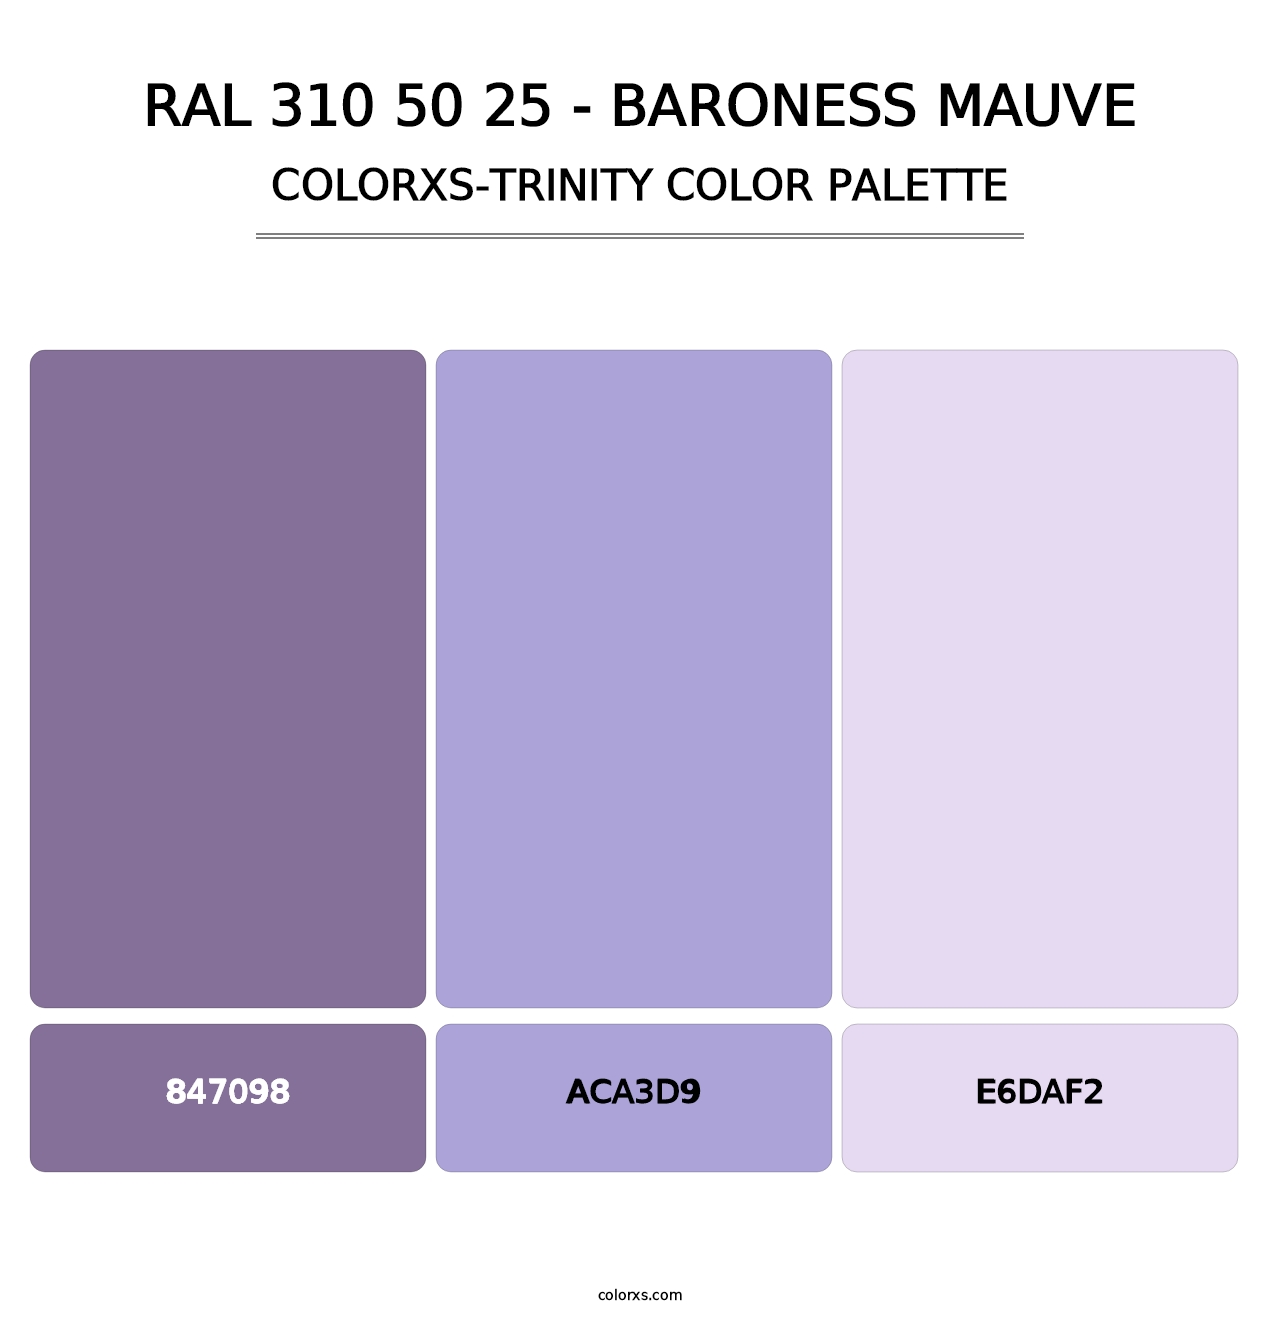 RAL 310 50 25 - Baroness Mauve - Colorxs Trinity Palette